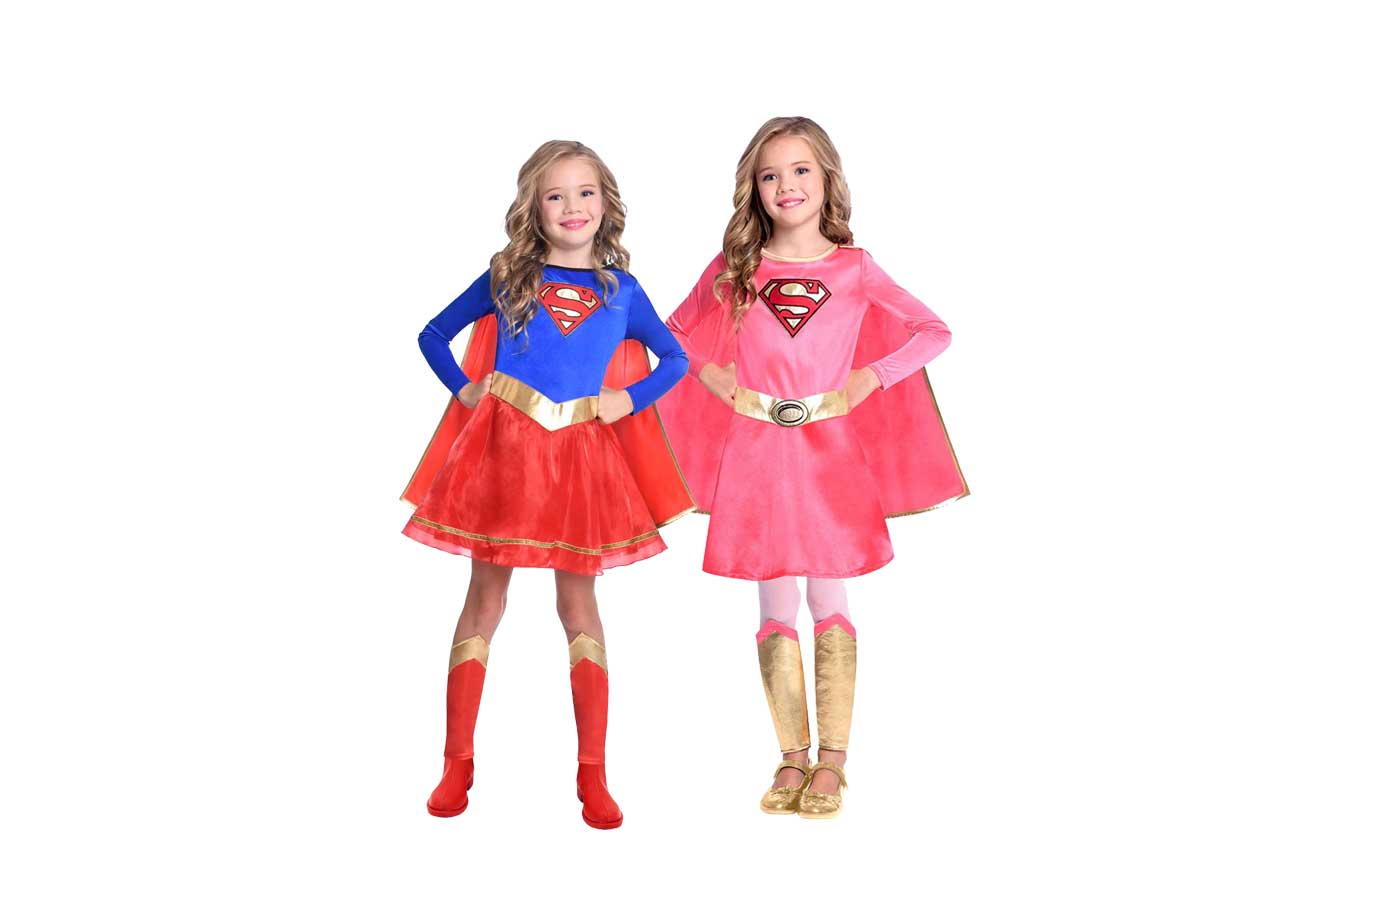 kids supergirl costume